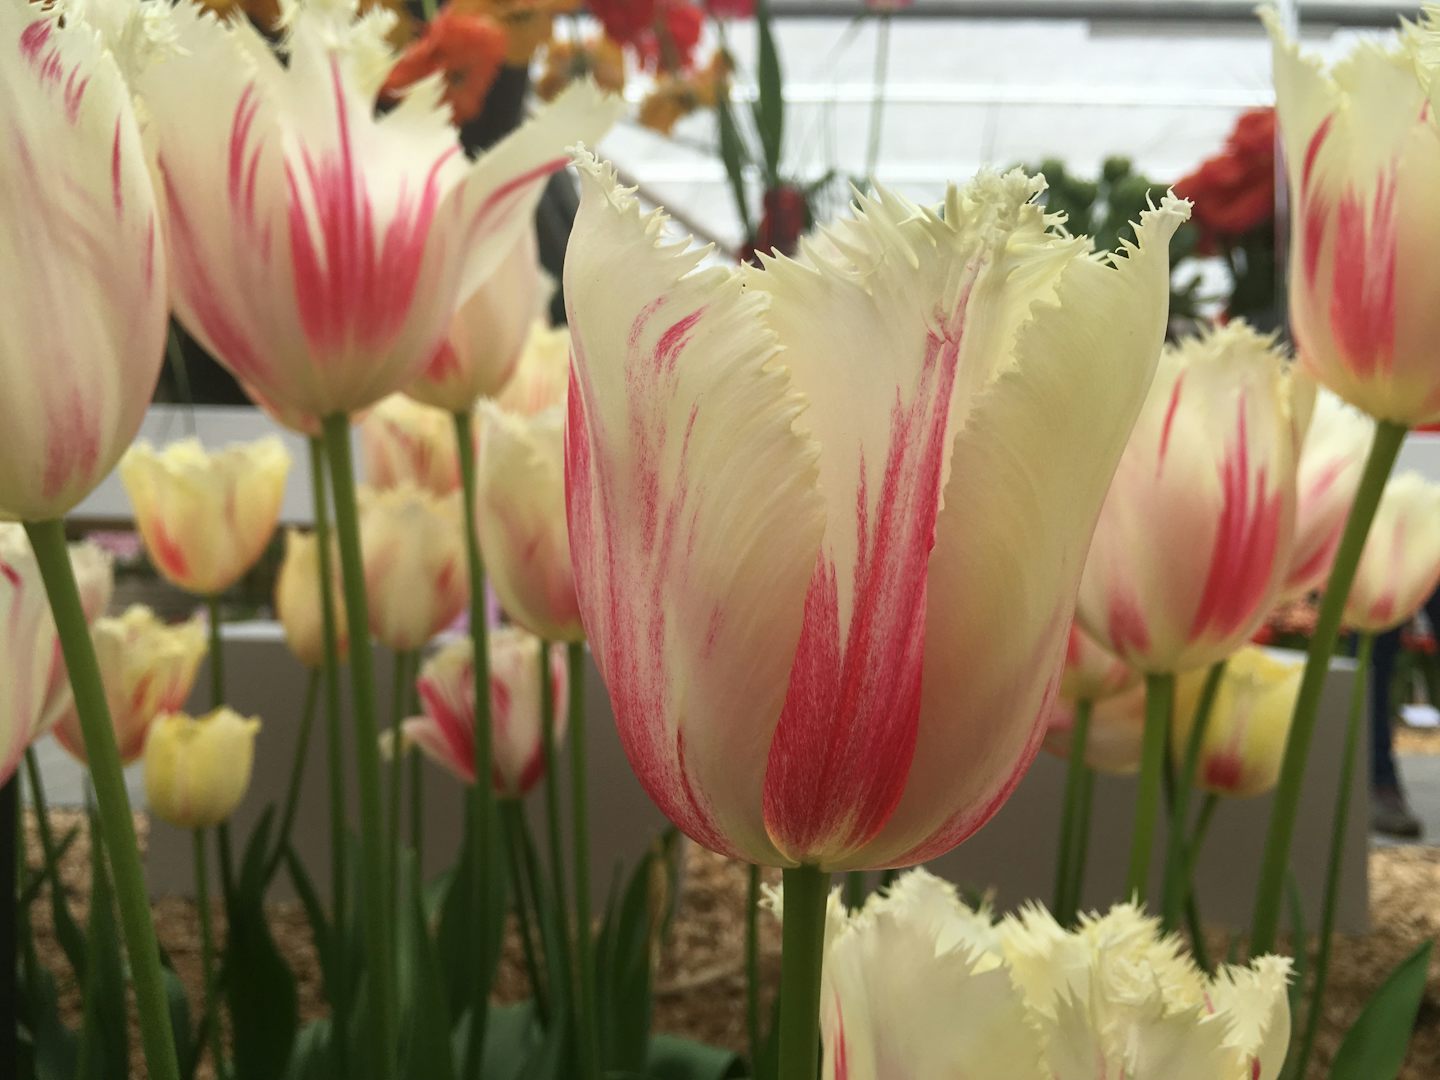 Such beautiful tulips at Keukenhof May 2 2016